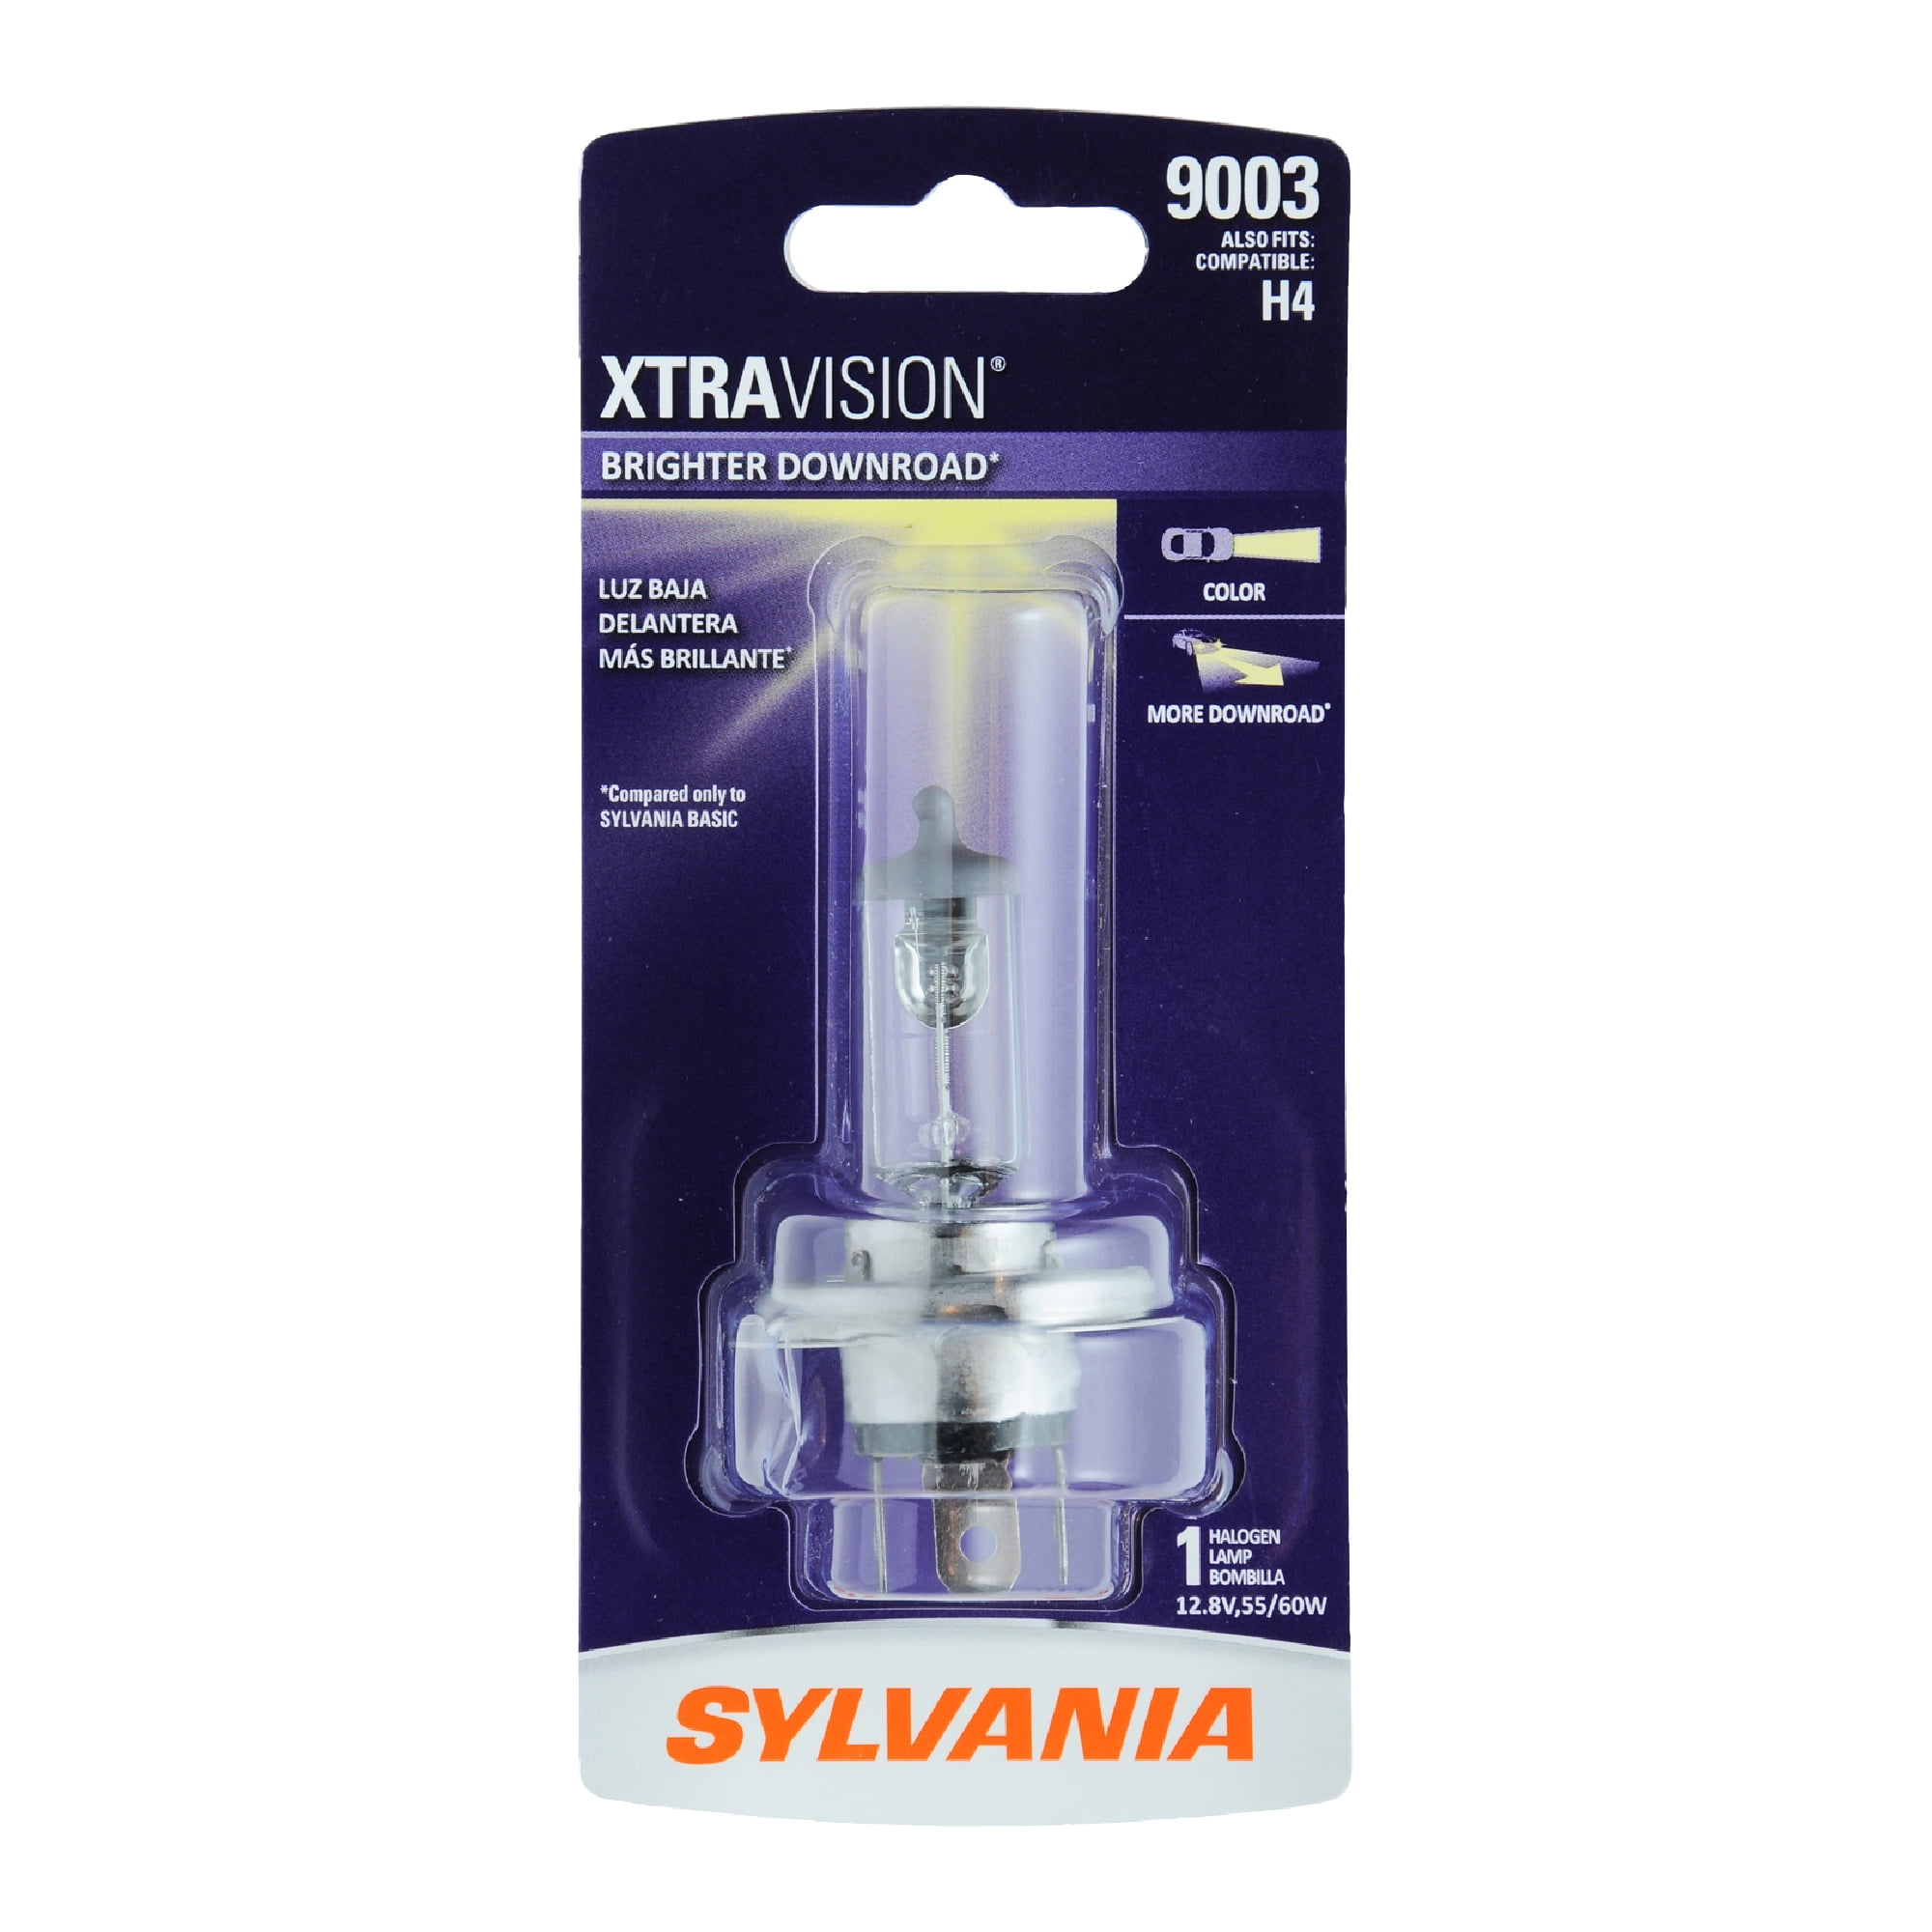 Sylvania 9003 XtraVision Halogen Headlight Bulb, Pack of 1.